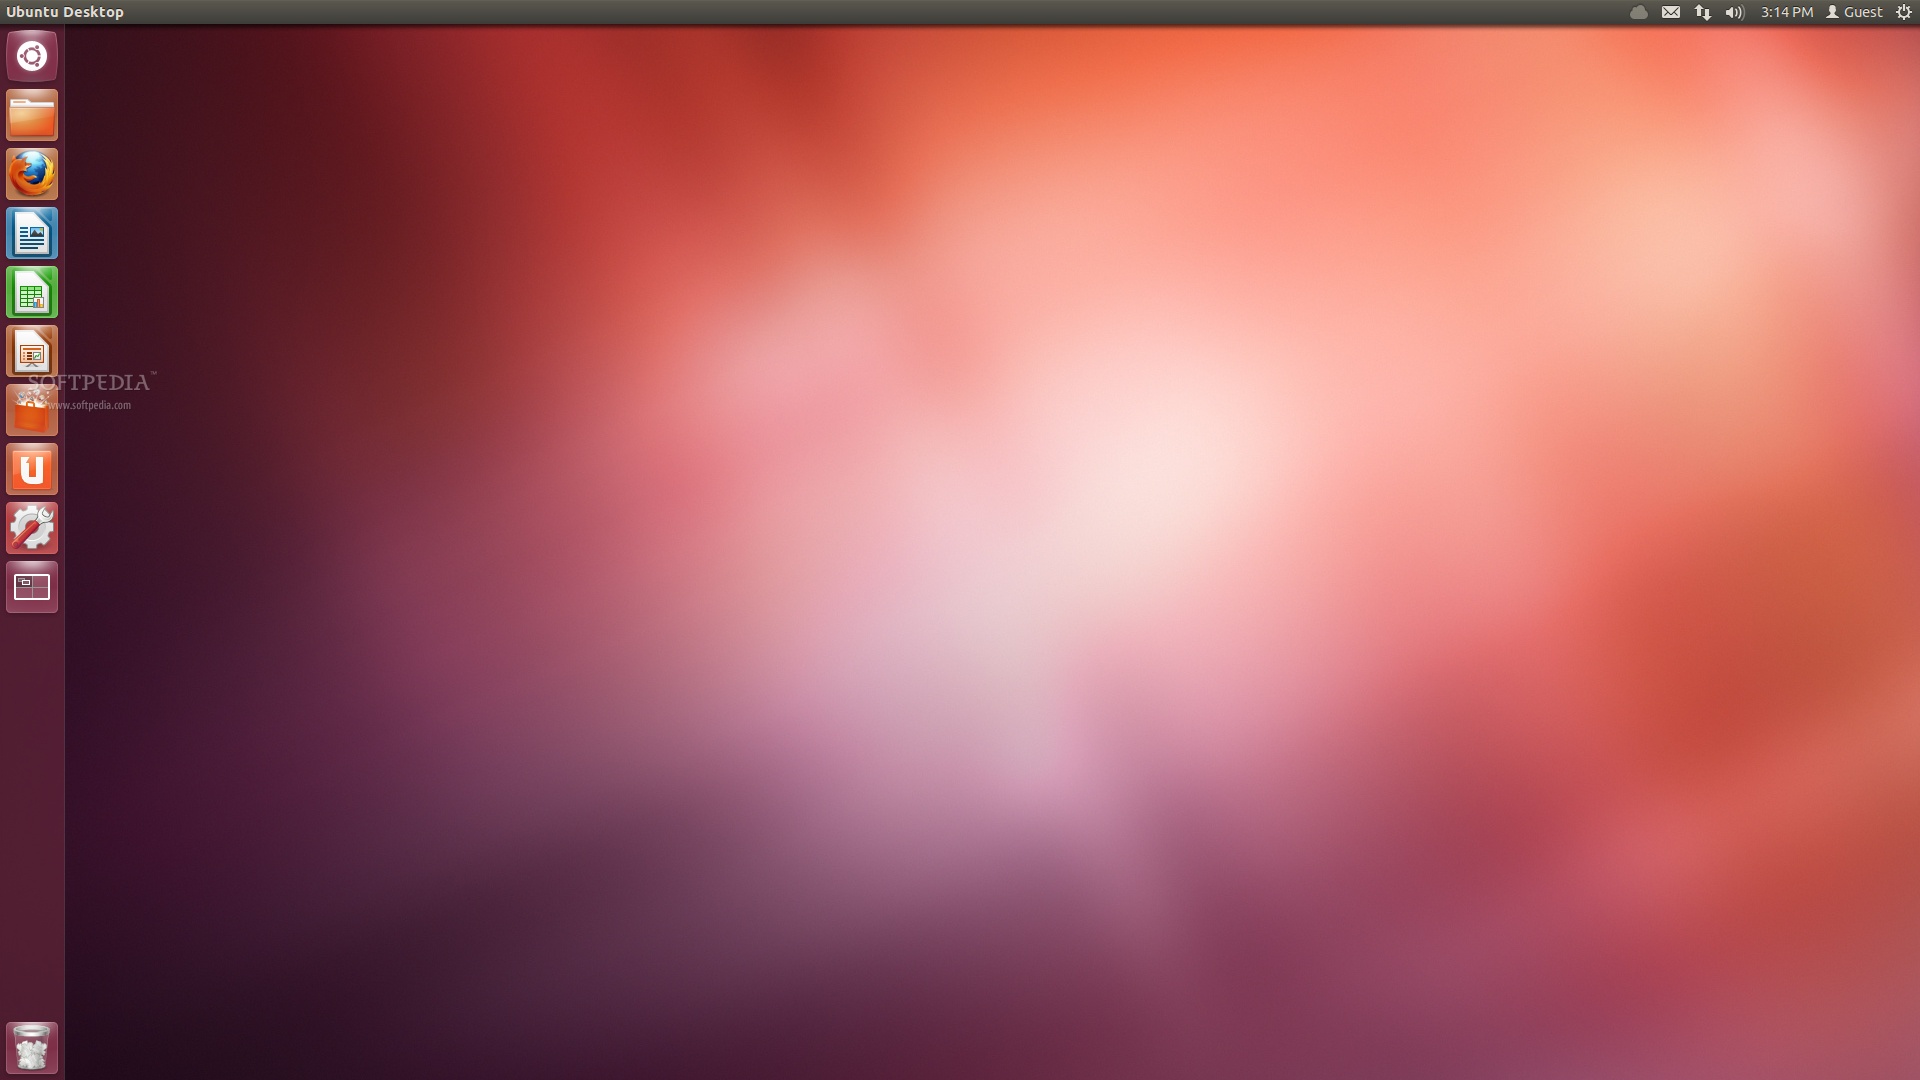 ubuntu 12.04.2 lts